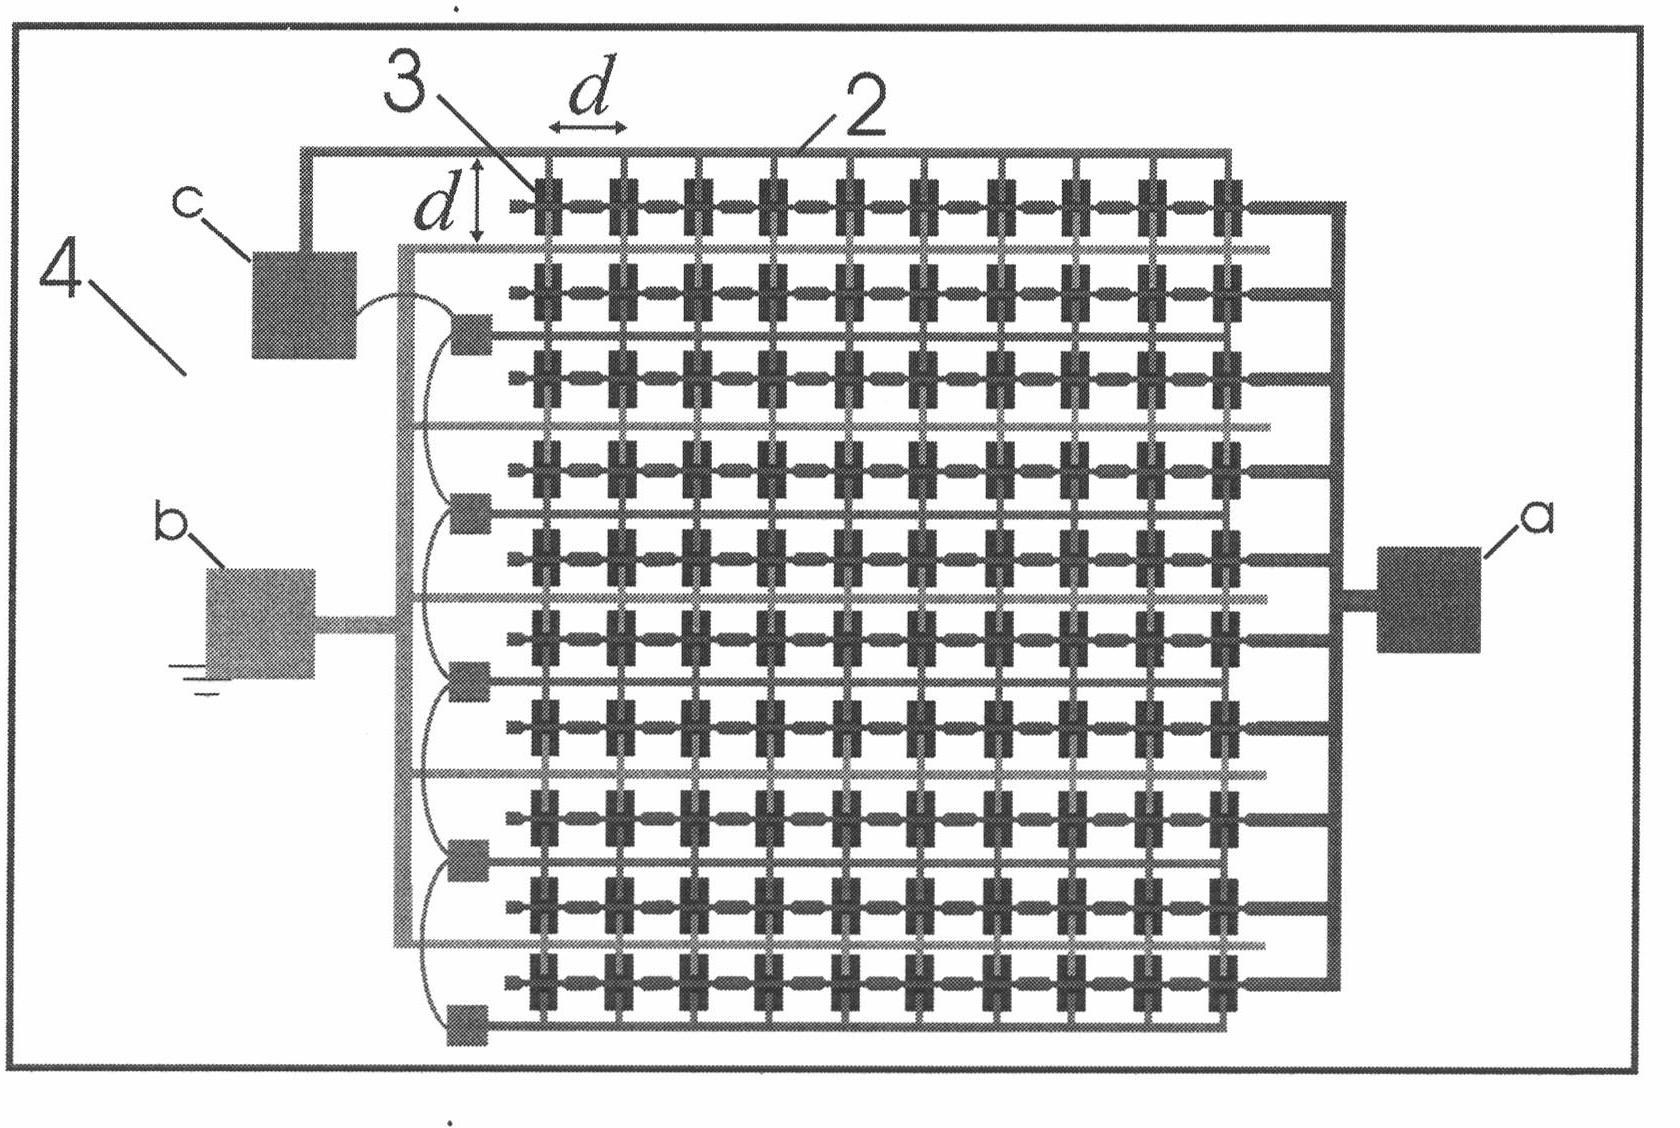 High-speed electrically regulated terahertz modulator